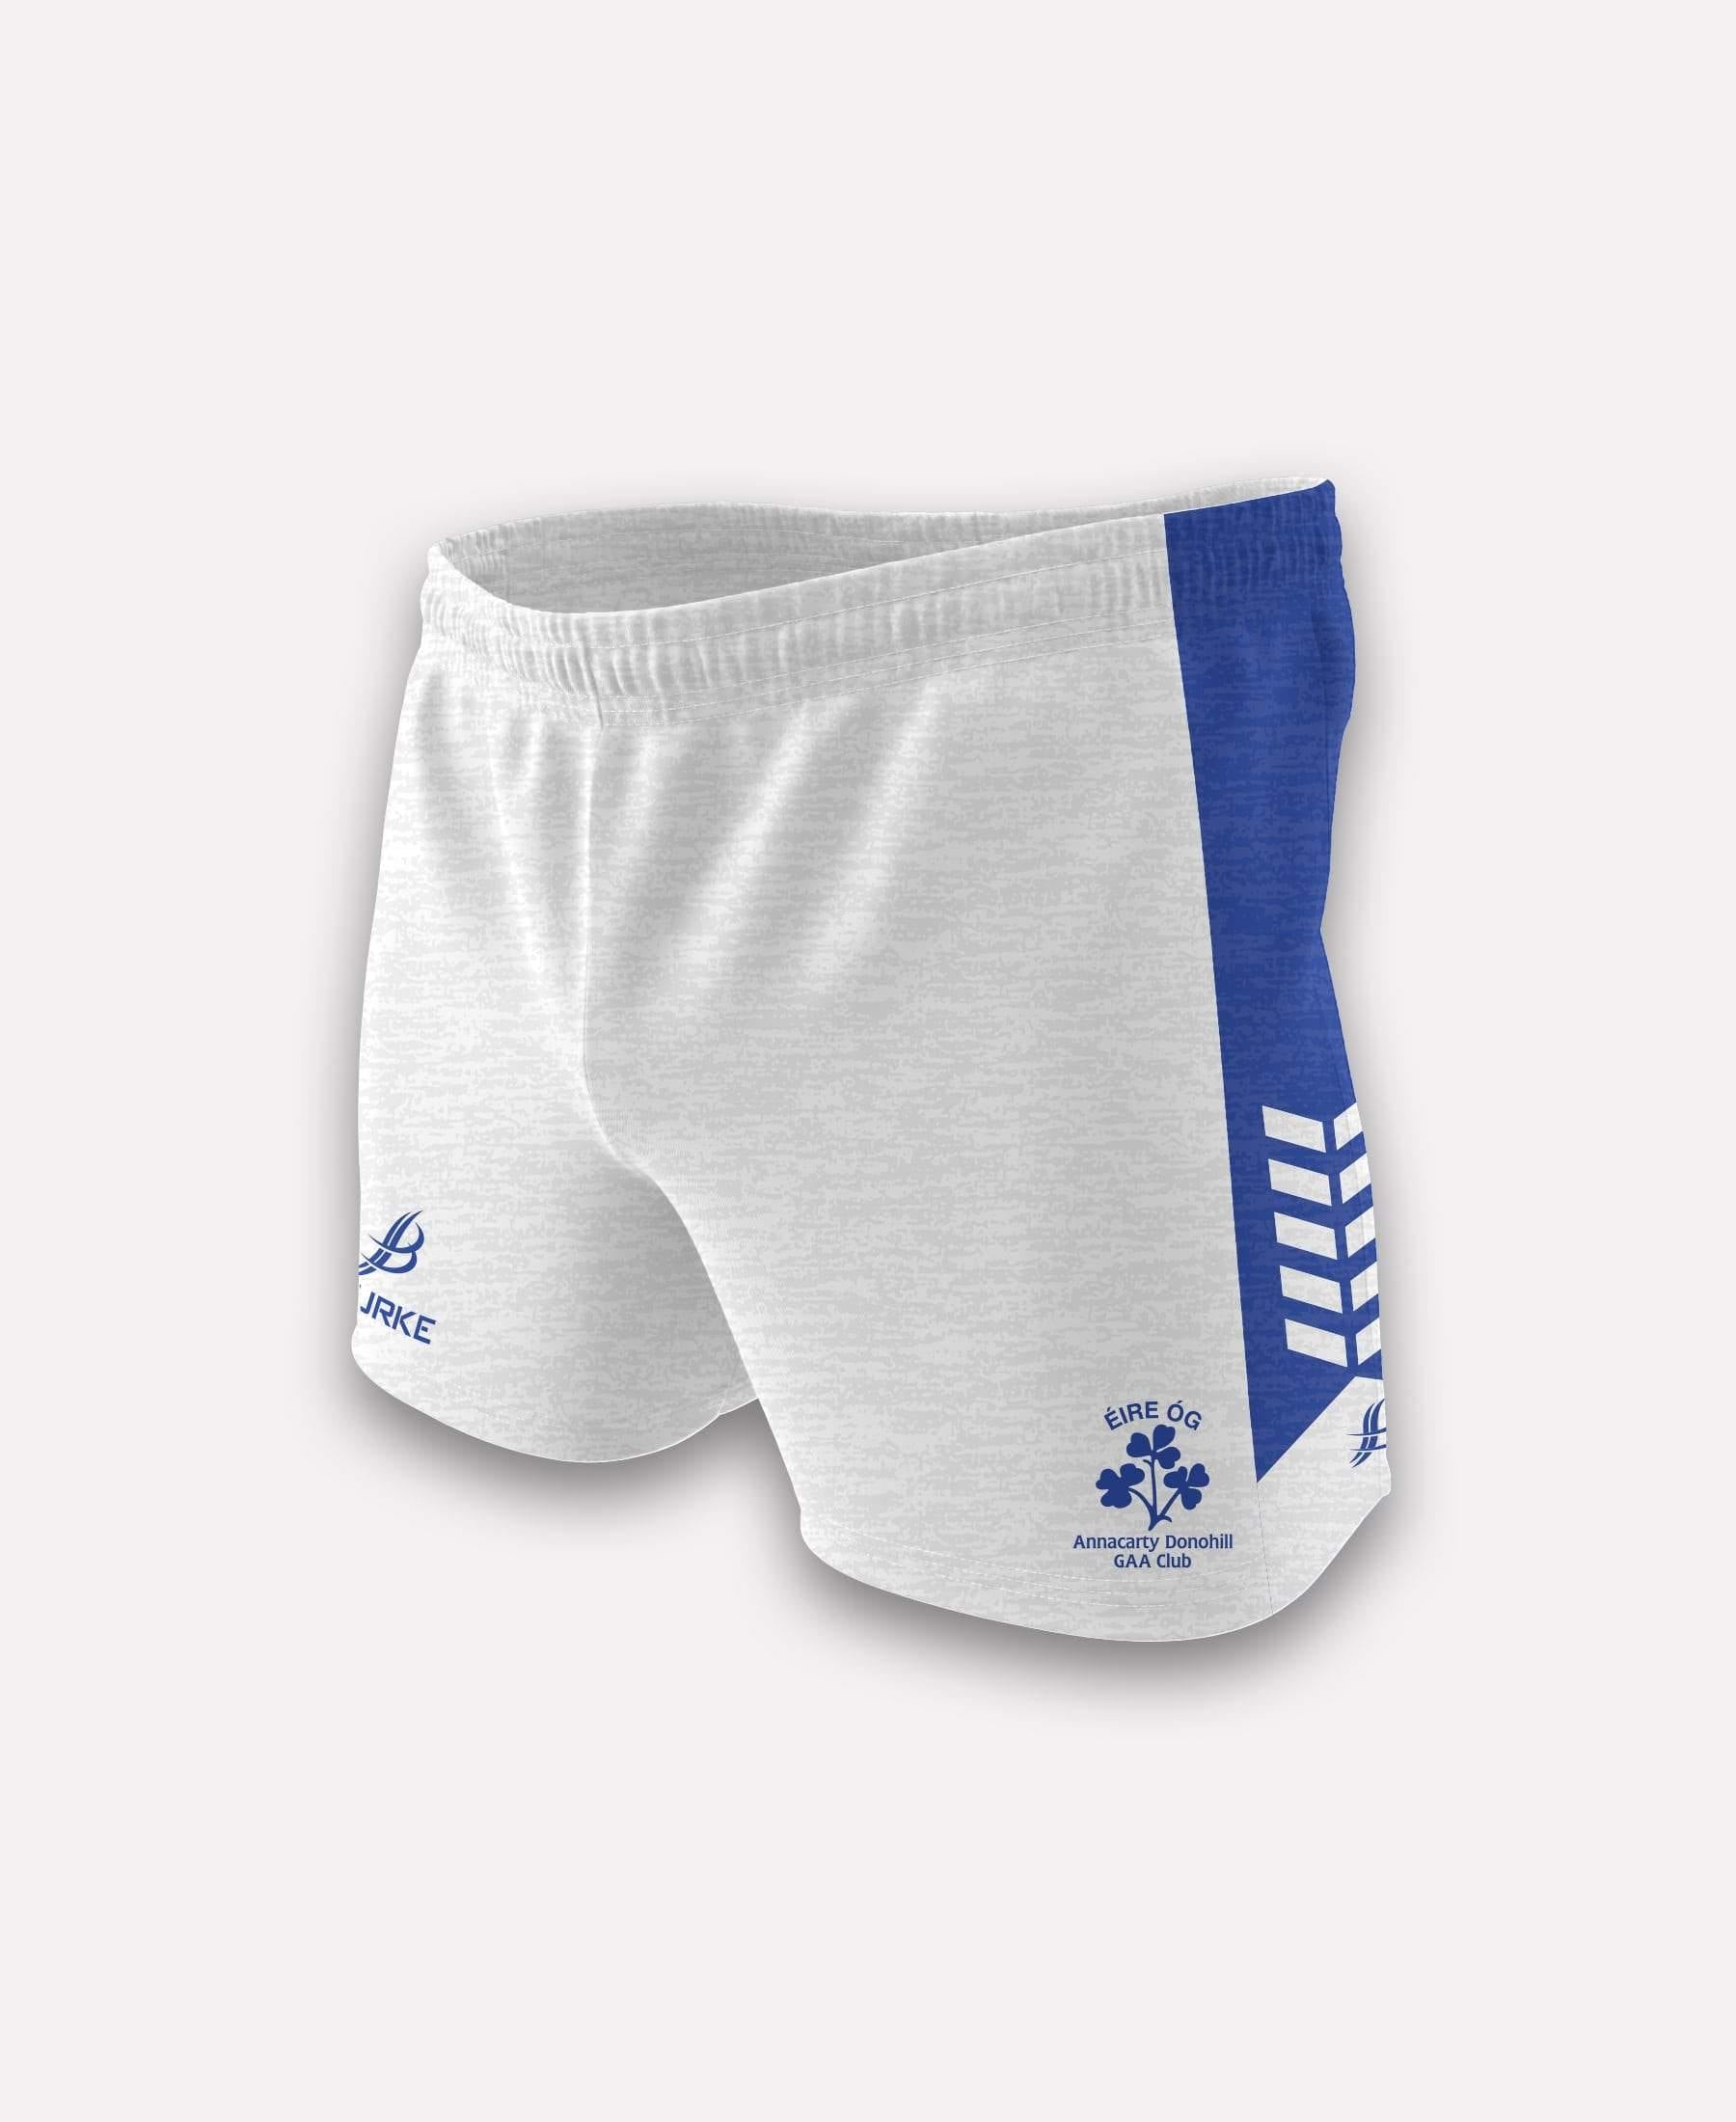 Eire Og Annacarty Donohill GAA Shorts - Bourke Sports Limited